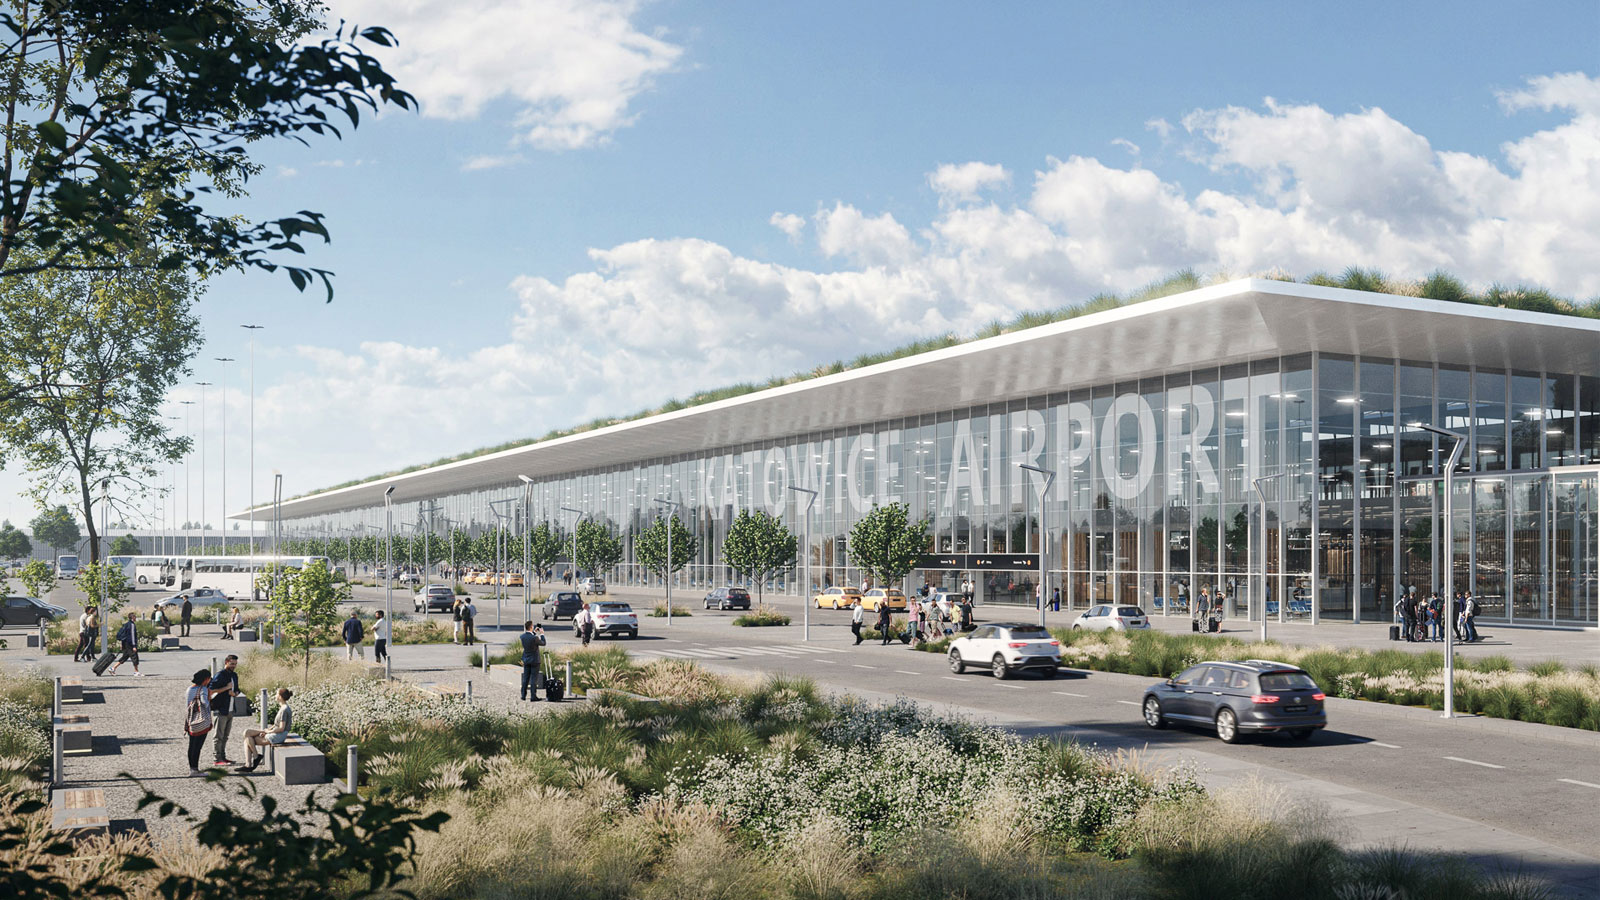 Massive new terminal and direct UK flights: Major renovation at original European airport